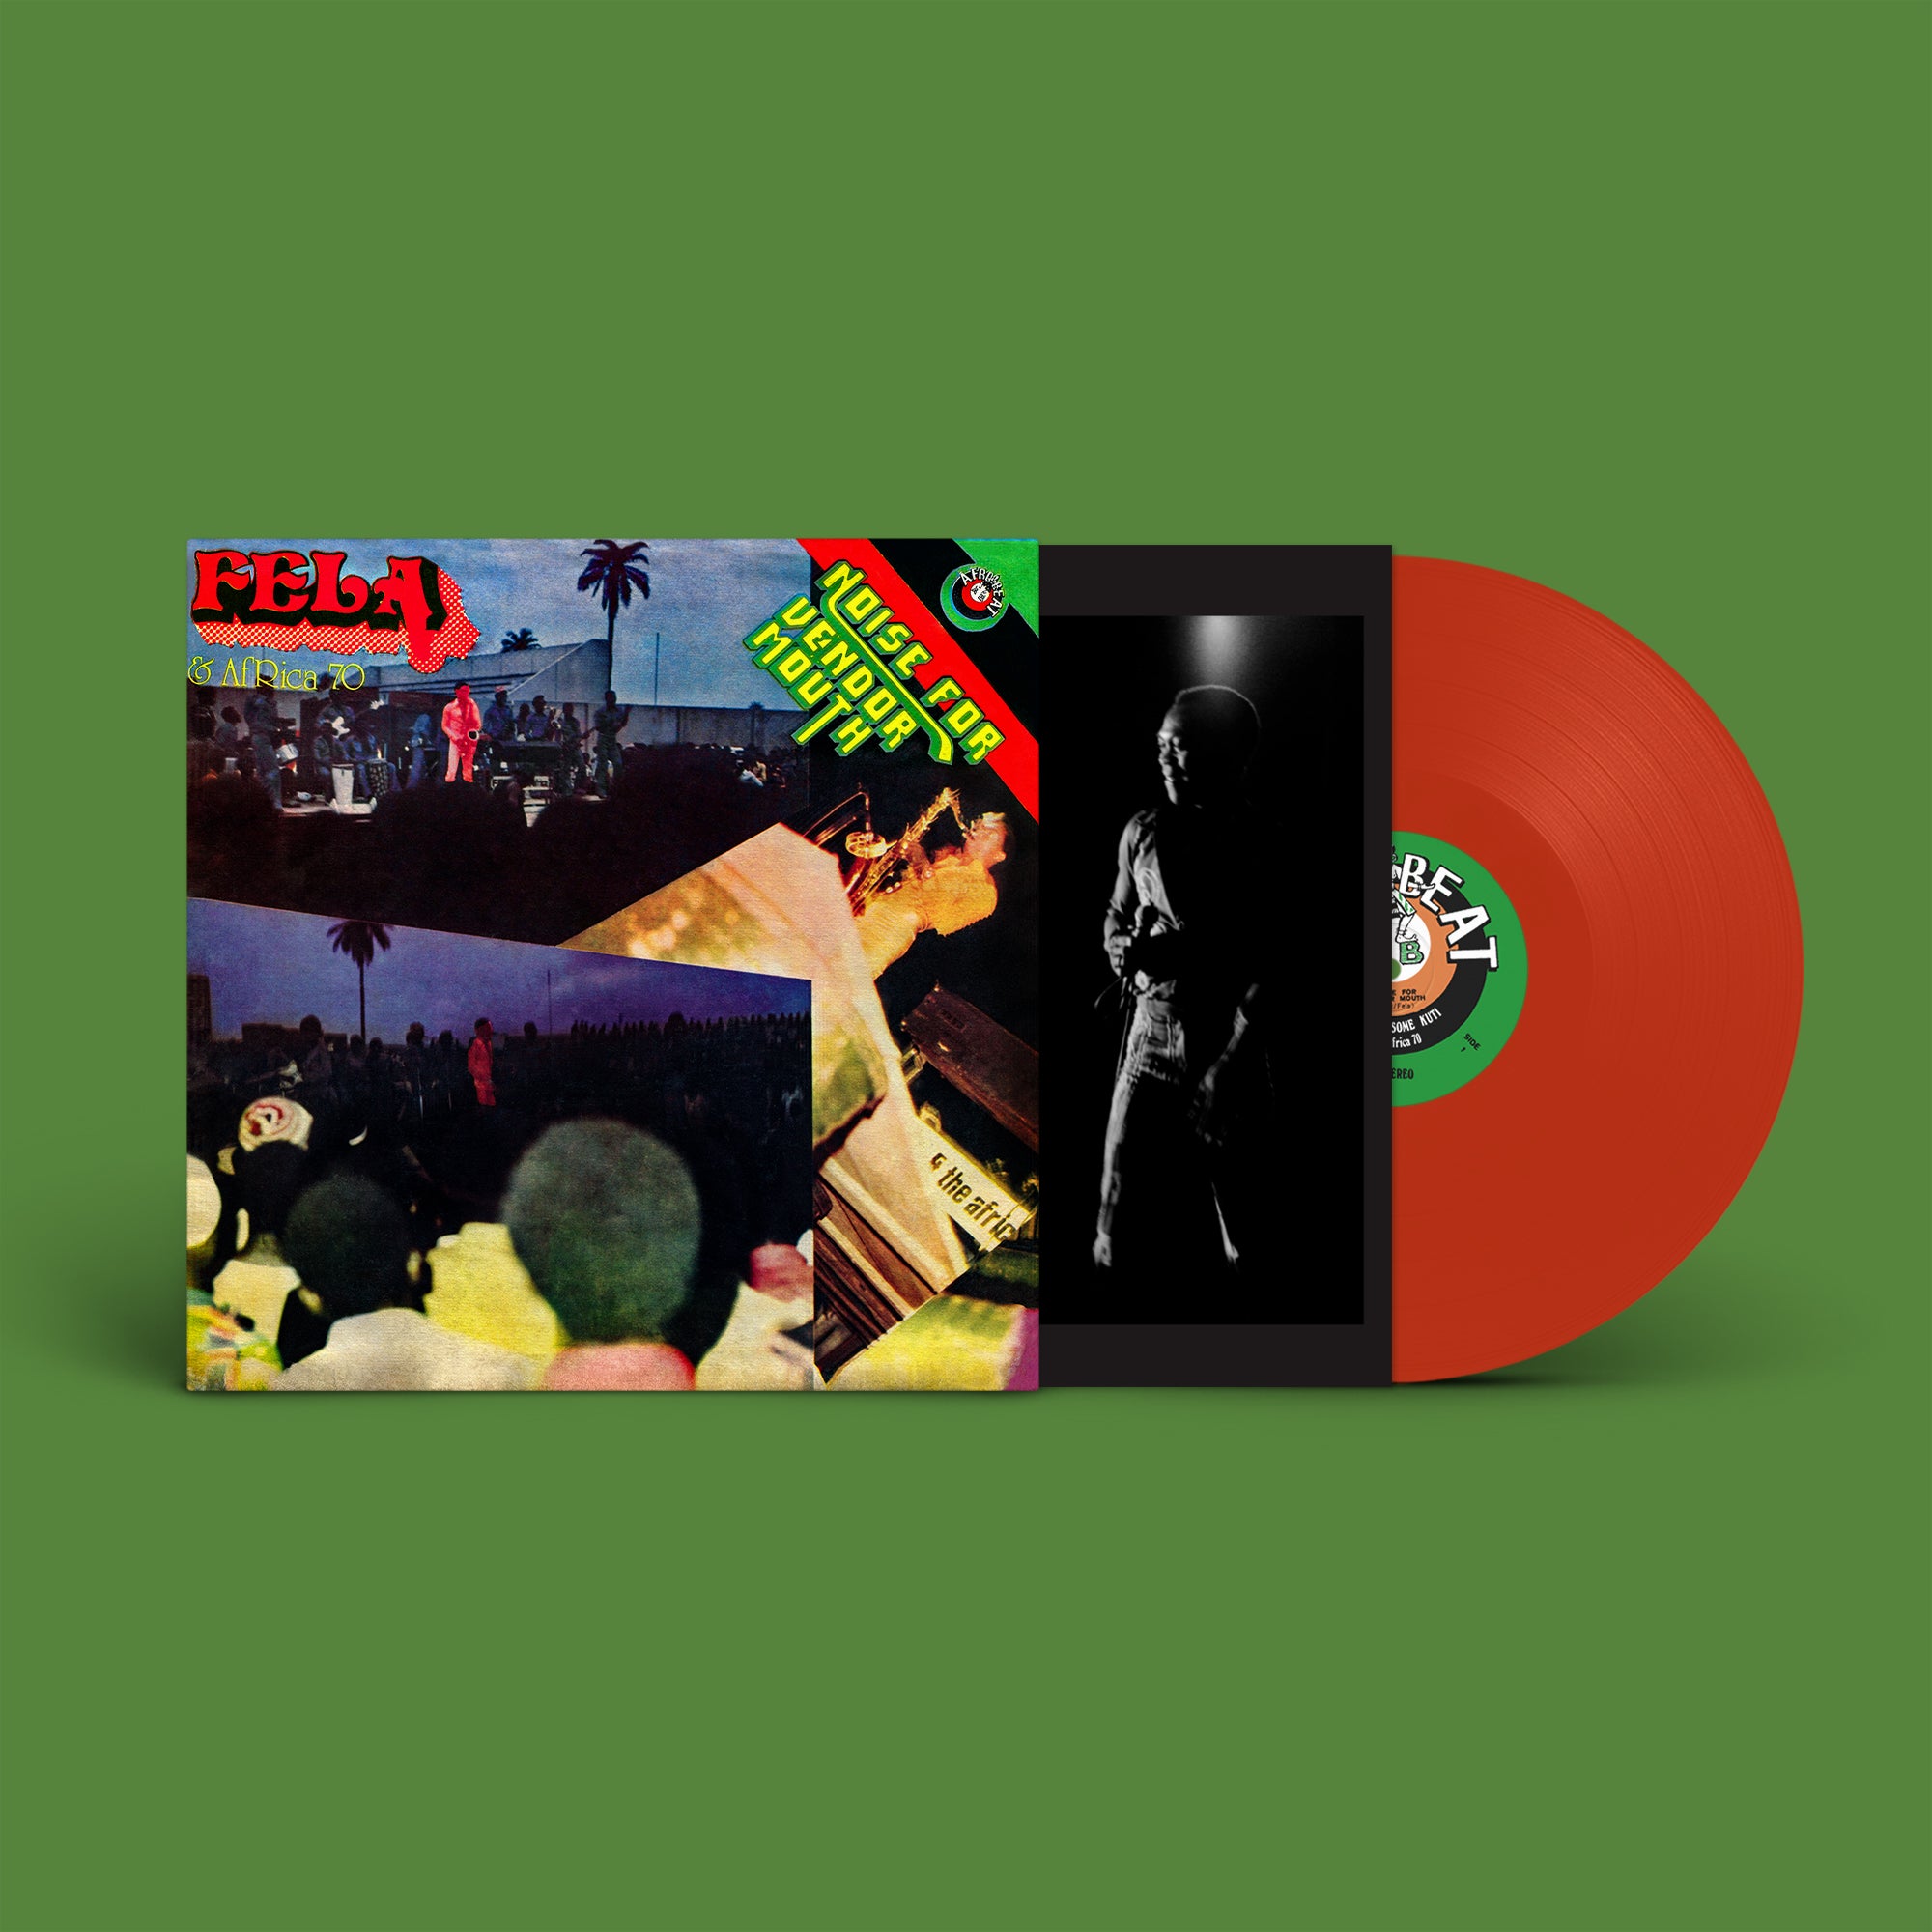 Fela Kuti - Noise For Vendor Mouth: Opaque Red Vinyl 12" Single